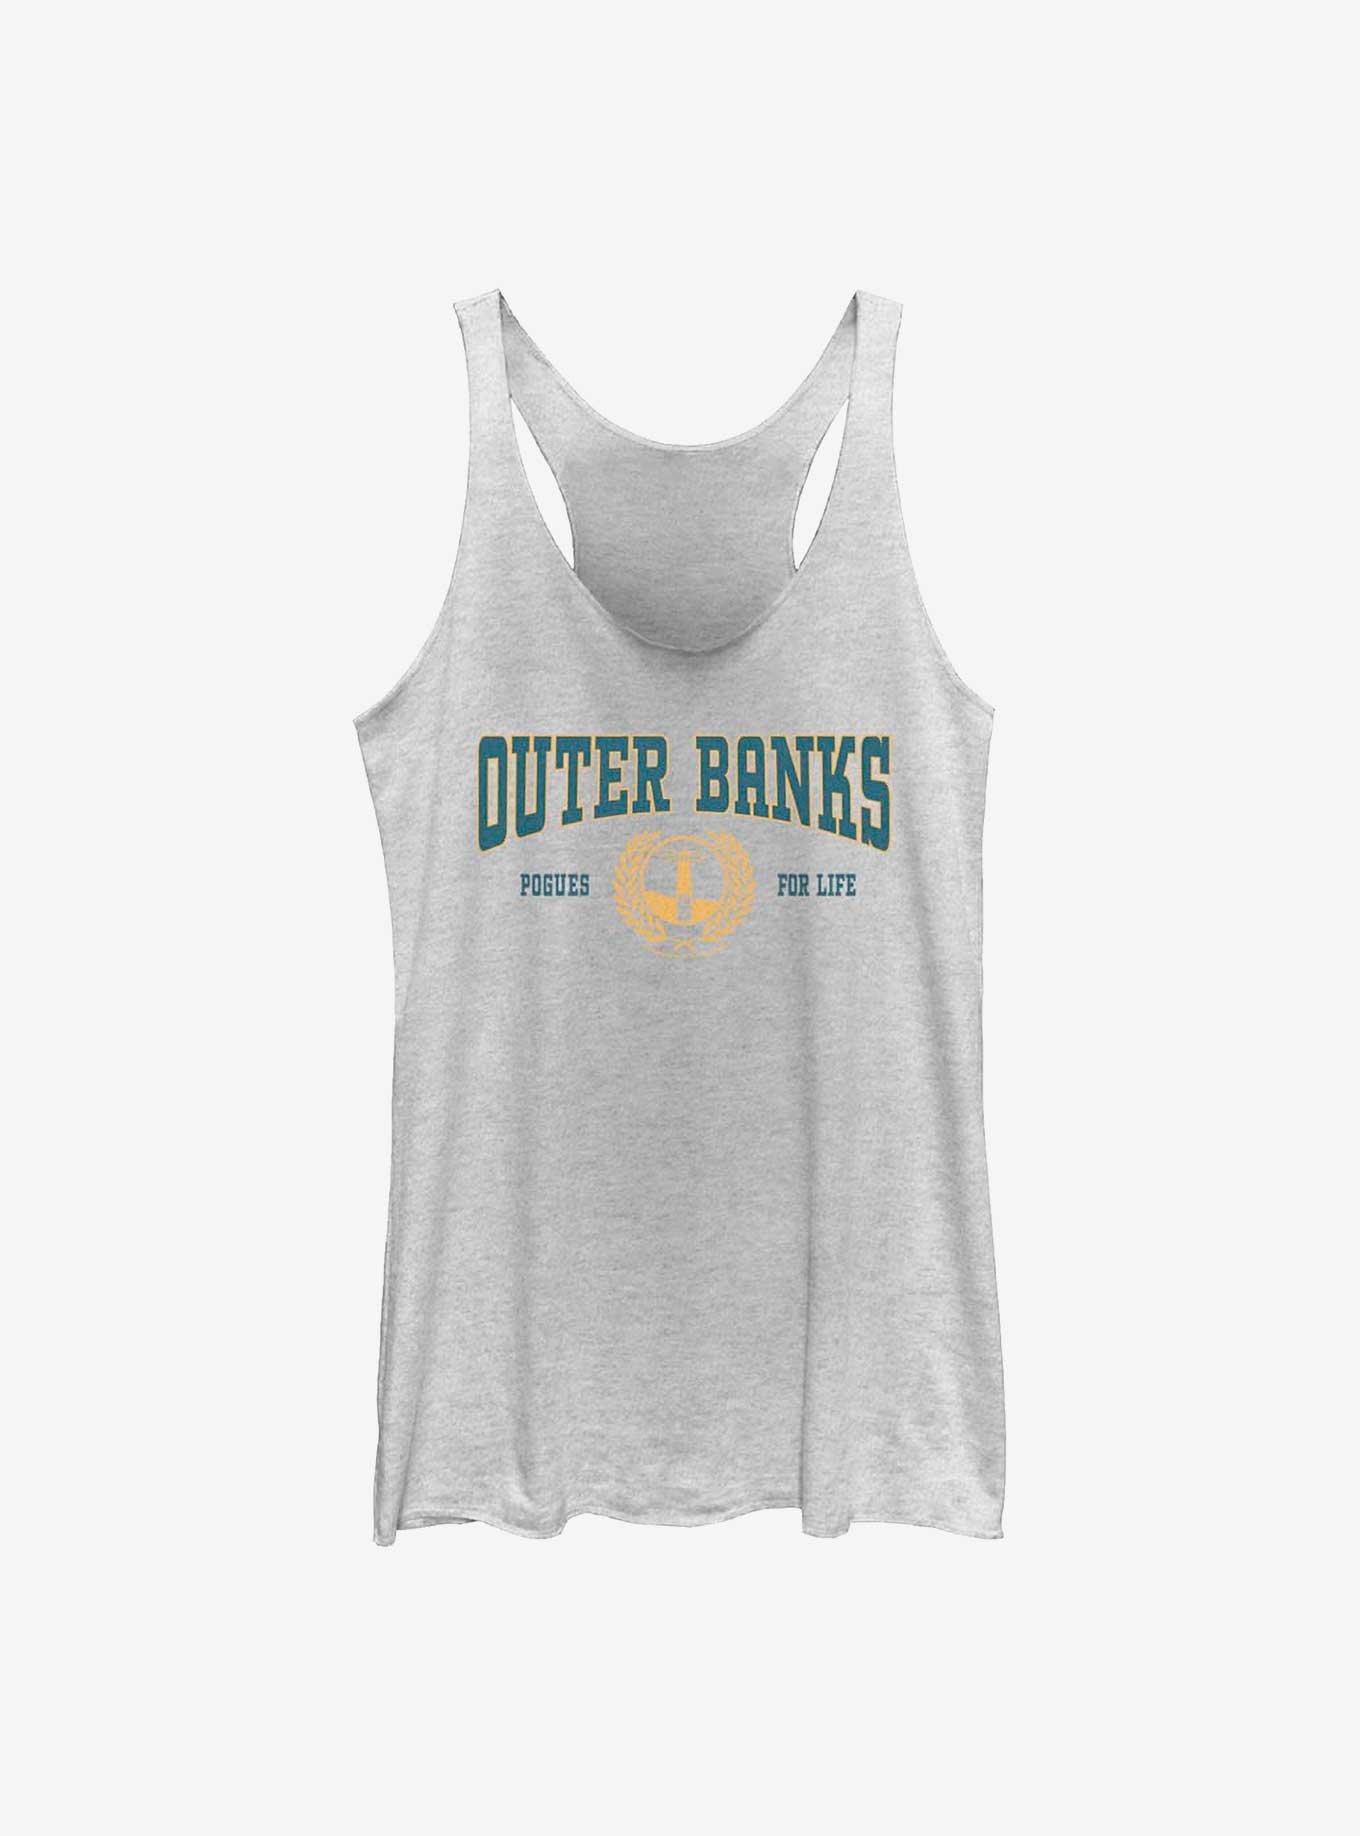 Outer Banks Collegiate Girls Tank, WHITE HTR, hi-res